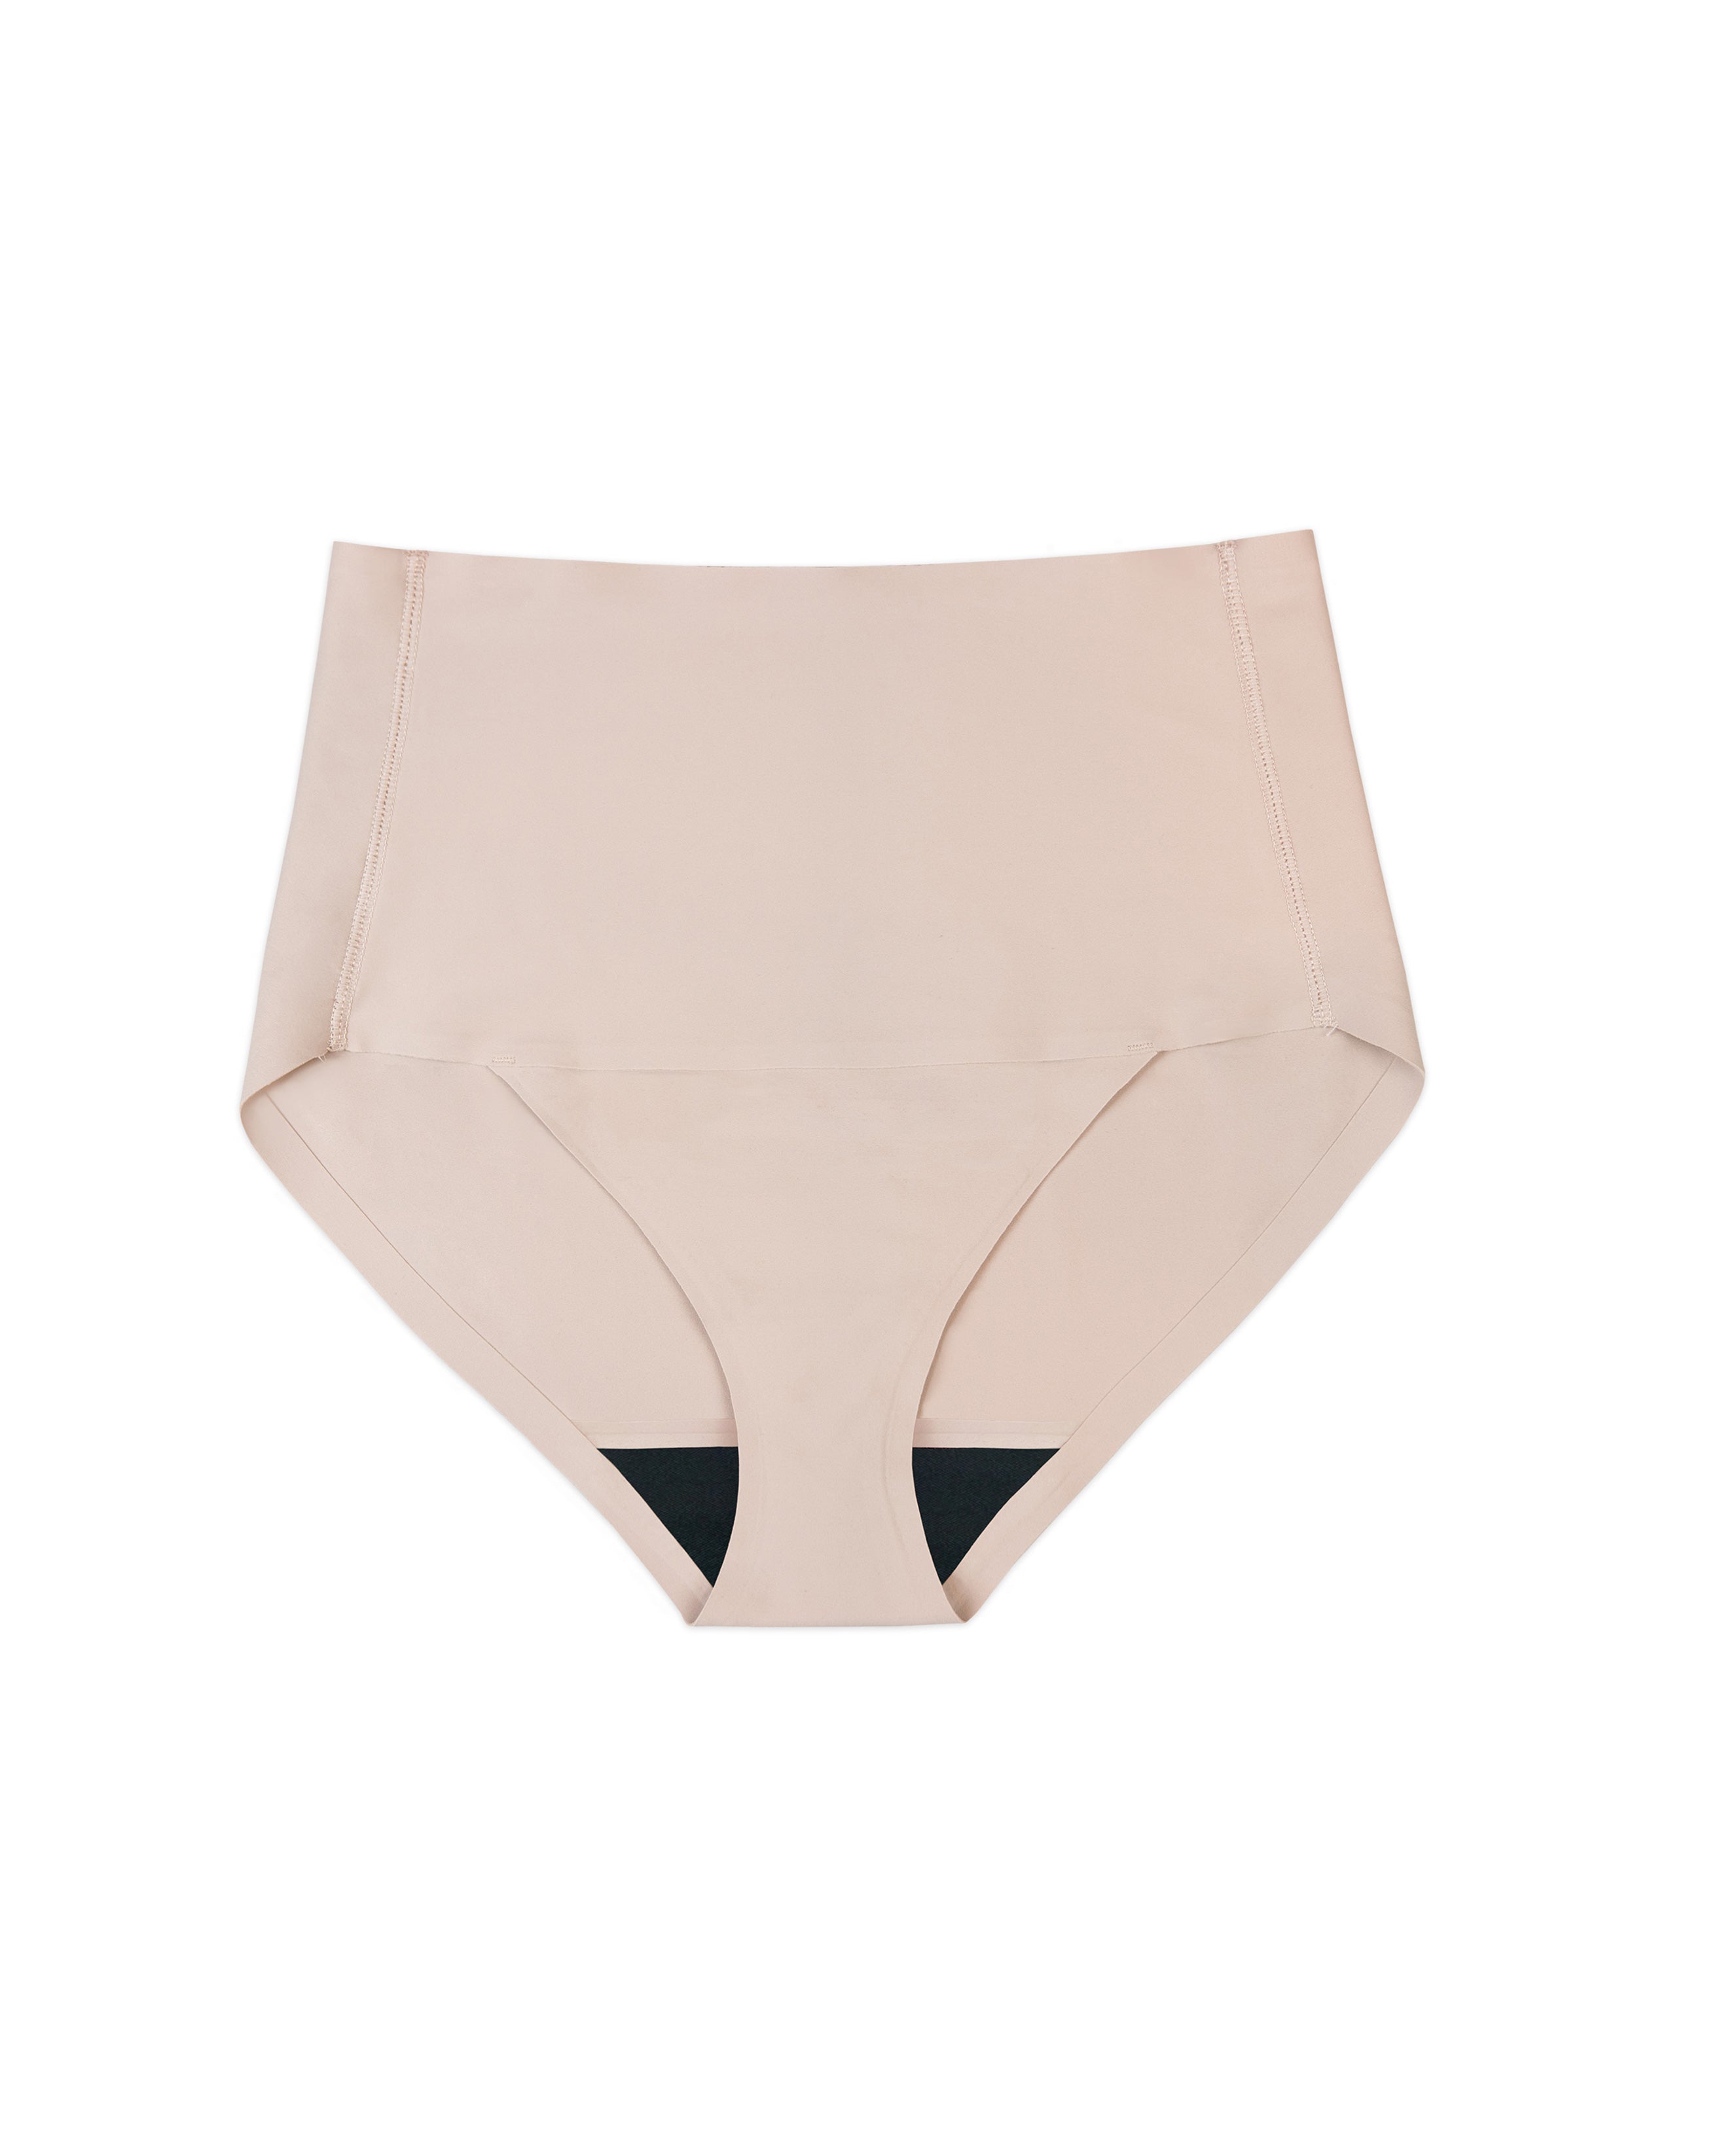 Our Best High Waist Tummy Control Leak Proof Period Underwear | Proof®